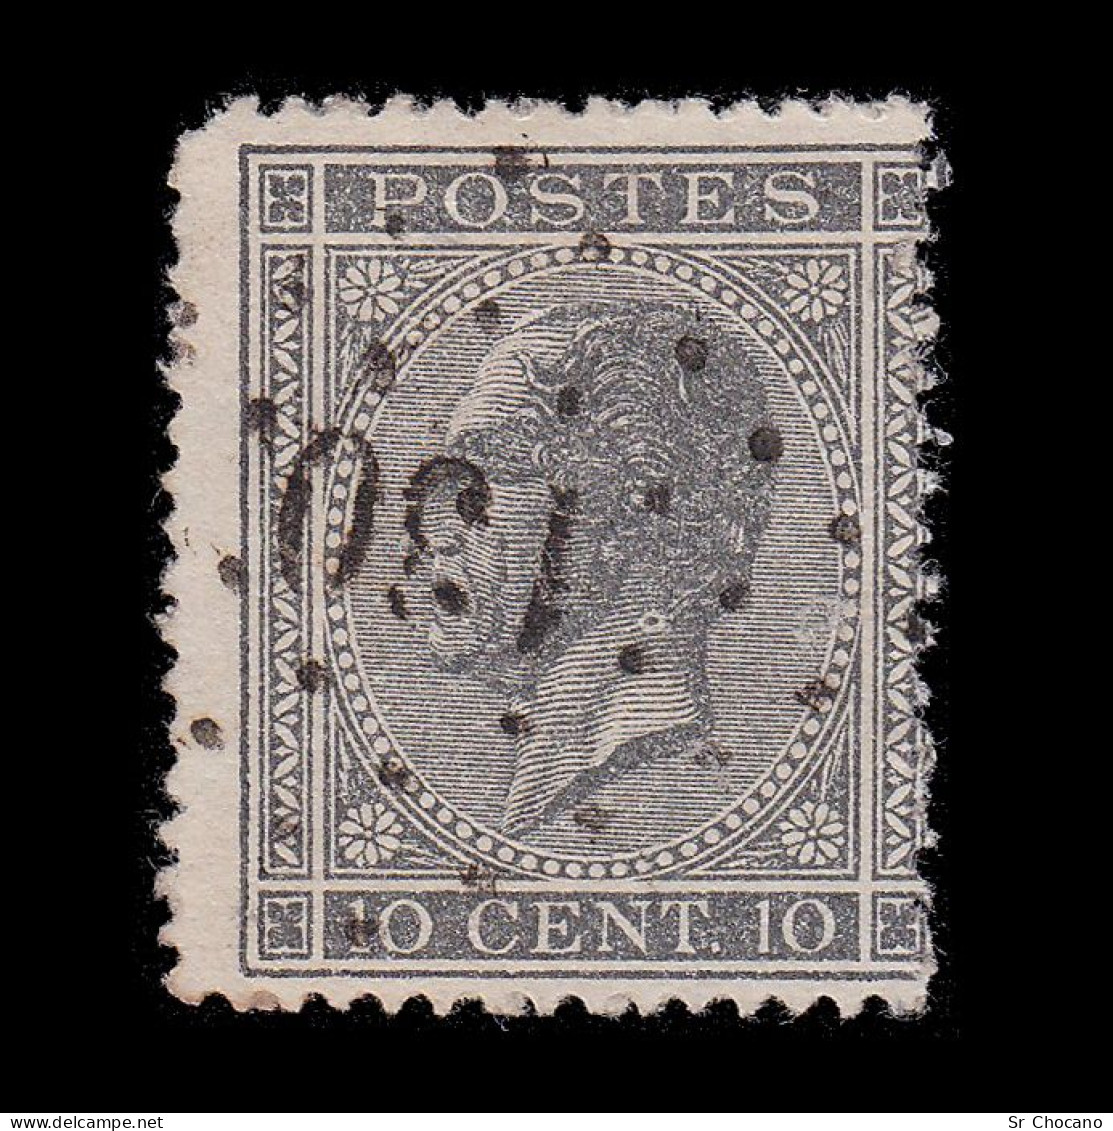 BELGIUM.1867.King Leopold I.10c.SCOTT 18.CANCEL 180. - 1866-1867 Coat Of Arms